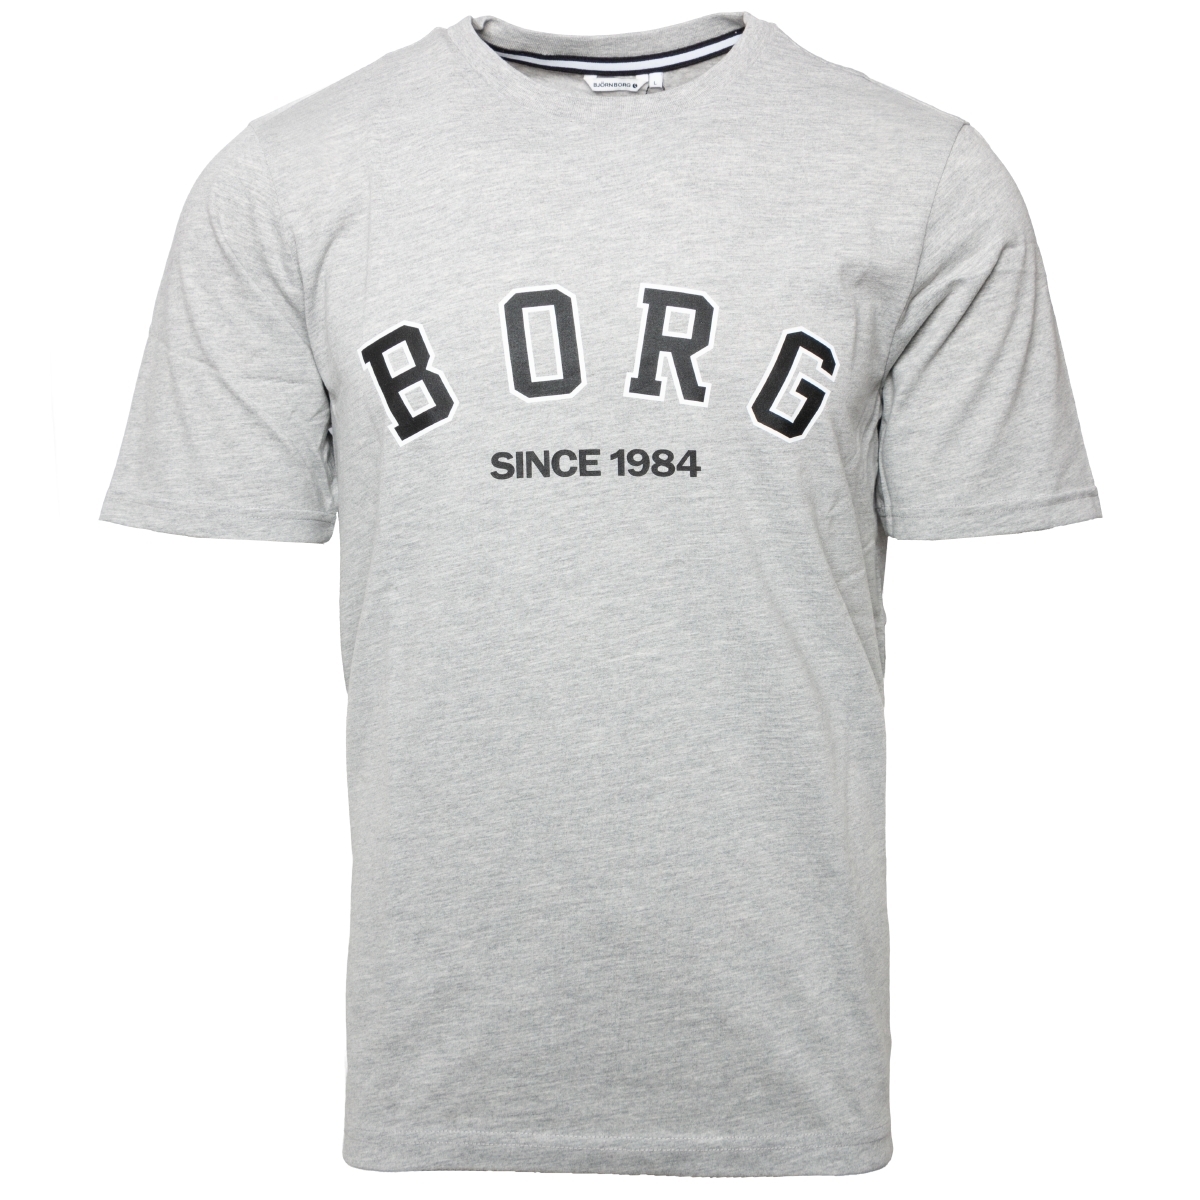 Björn Borg Tee T-Shirt grau